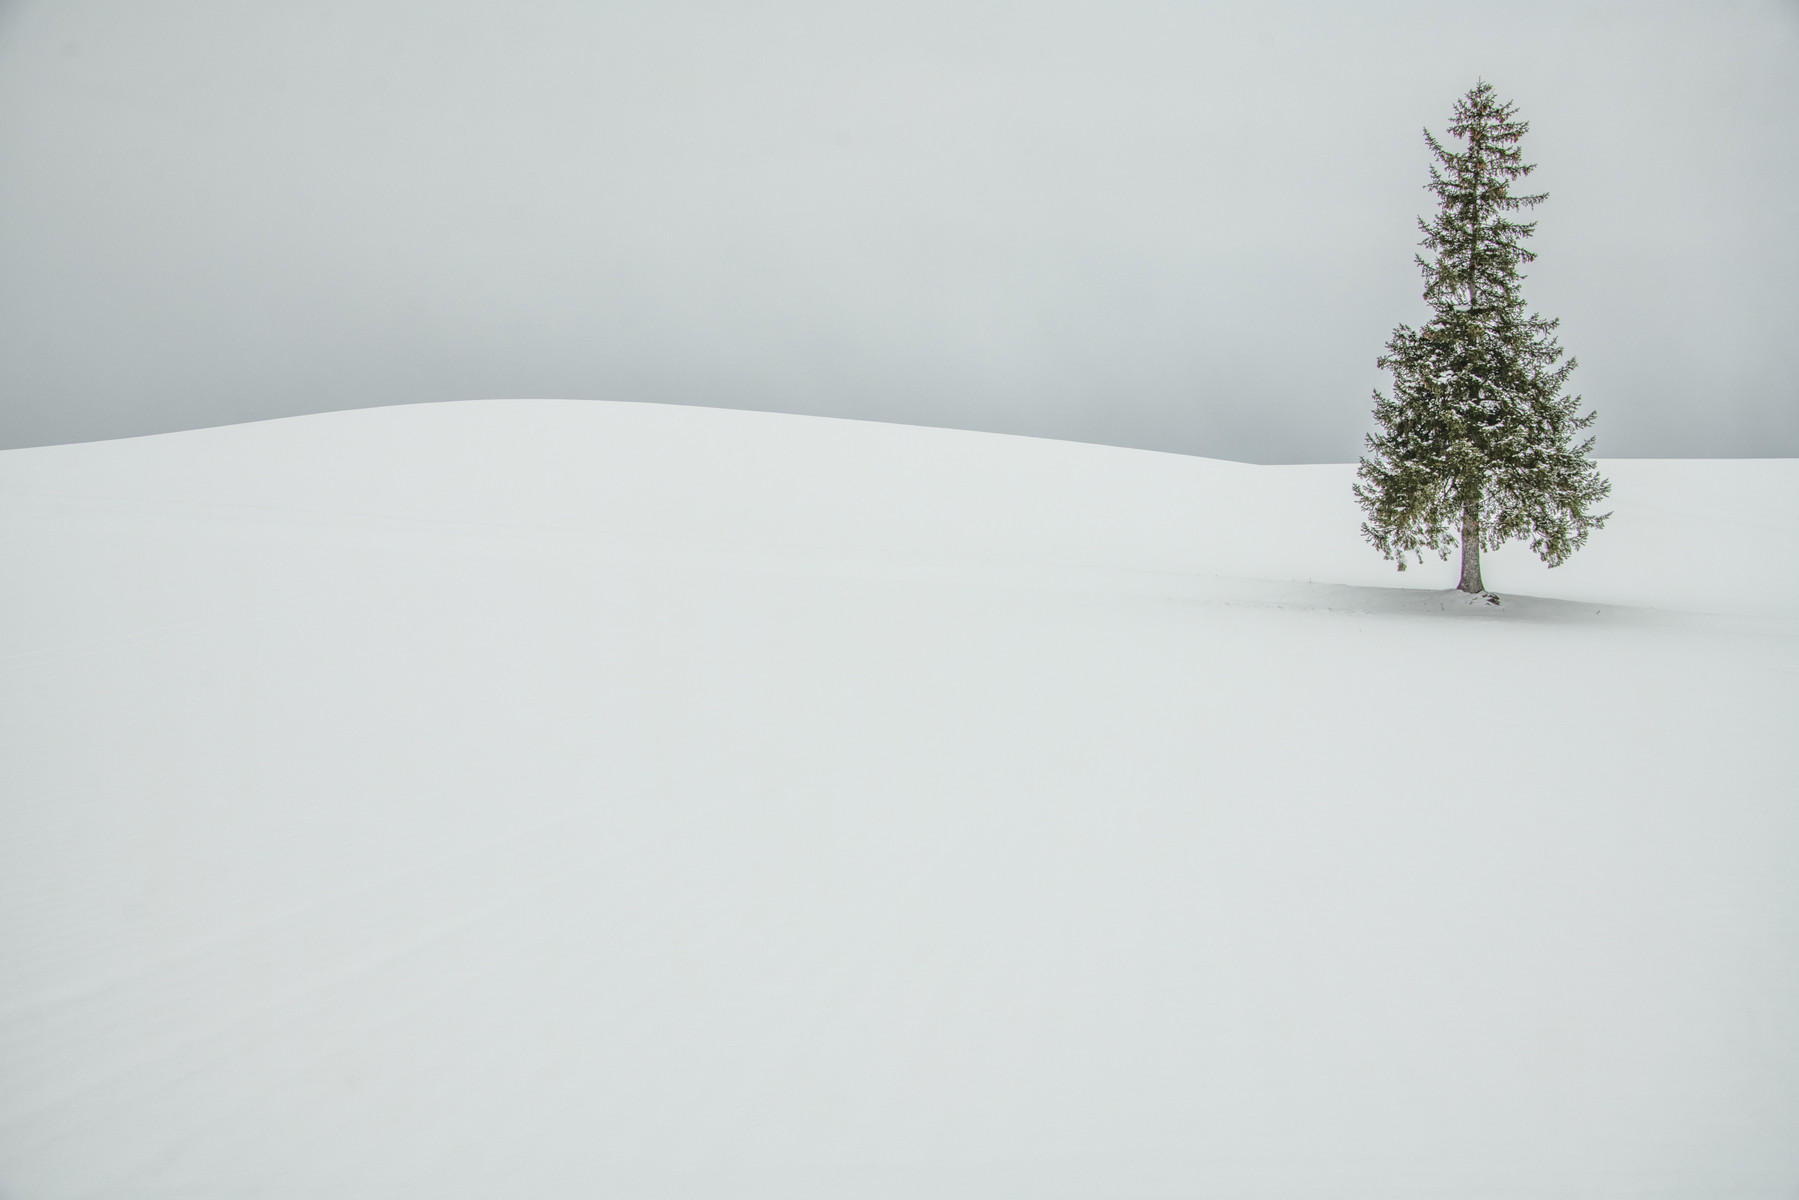 Solo : Japan, Hokkaido, Silent Snow : ELIZABETH SANJUAN PHOTOGRAPHY